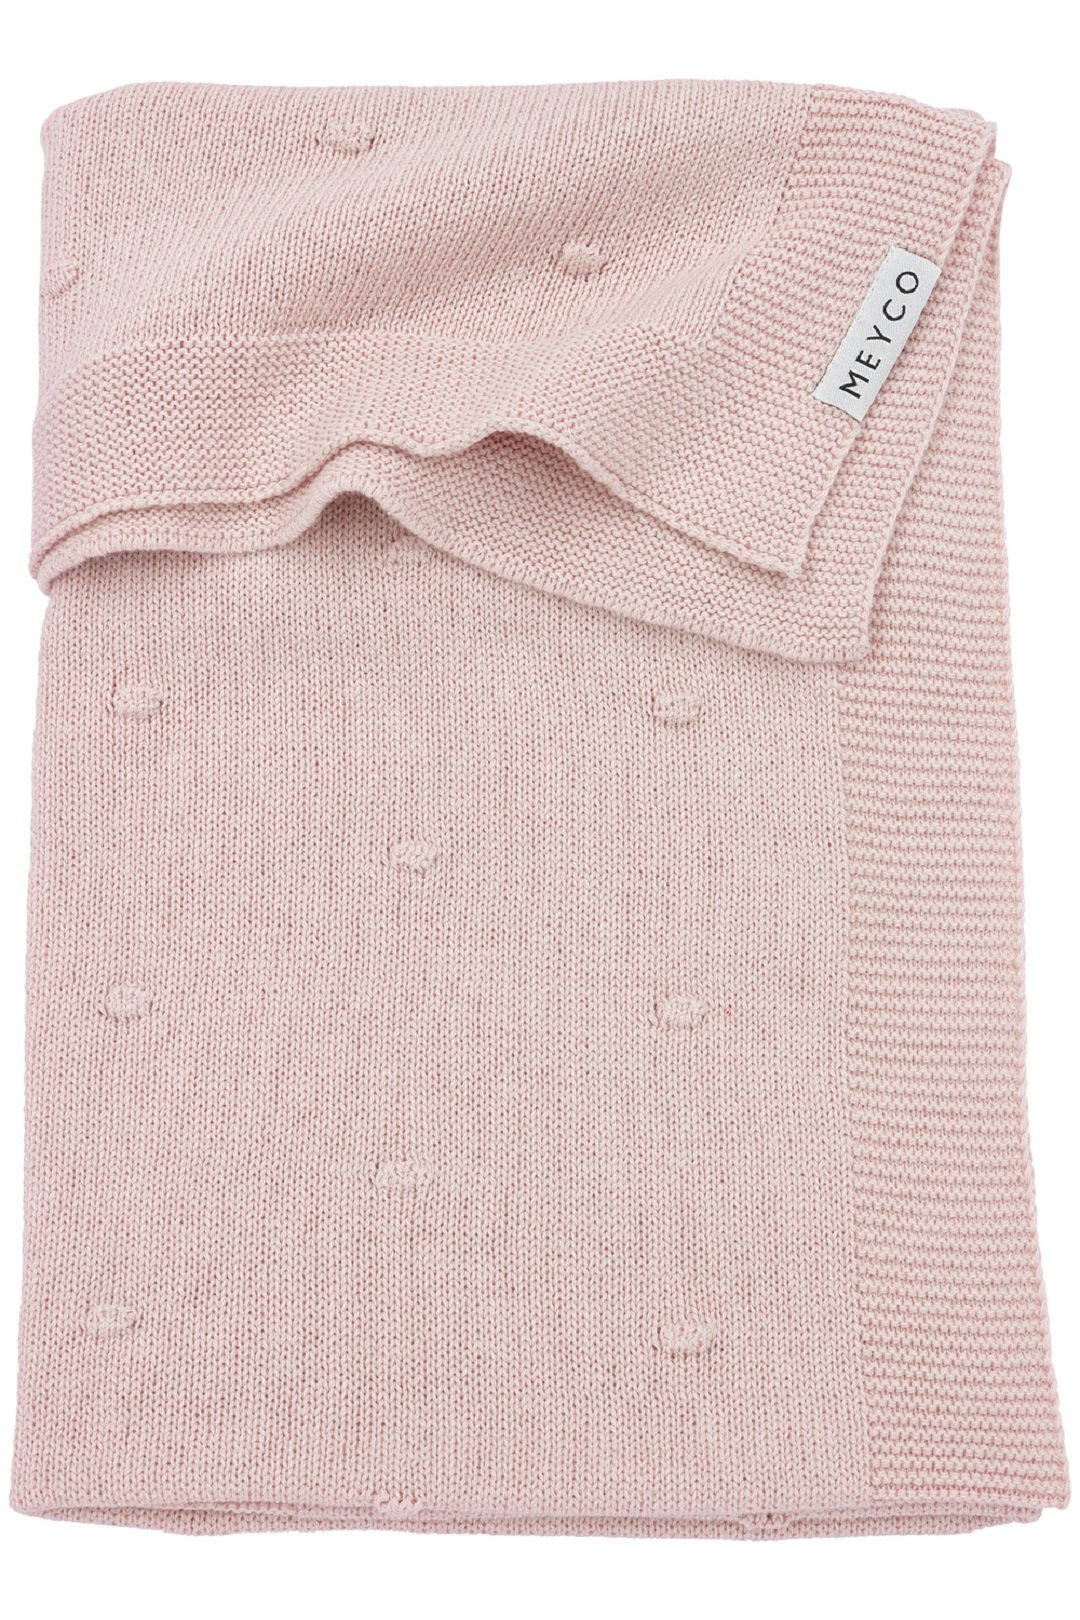 Meyco Mini Knots ledikant deken - soft pink - 100x150cm